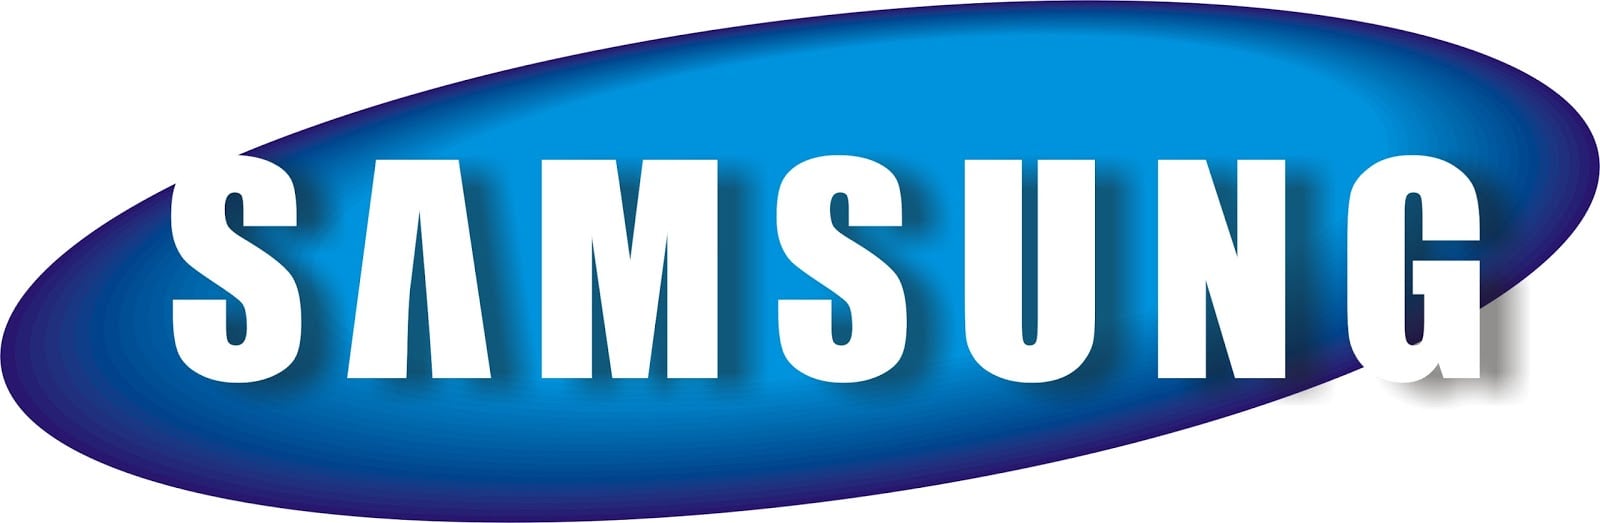 Samsung Logo Wallpapers 9 1600x523